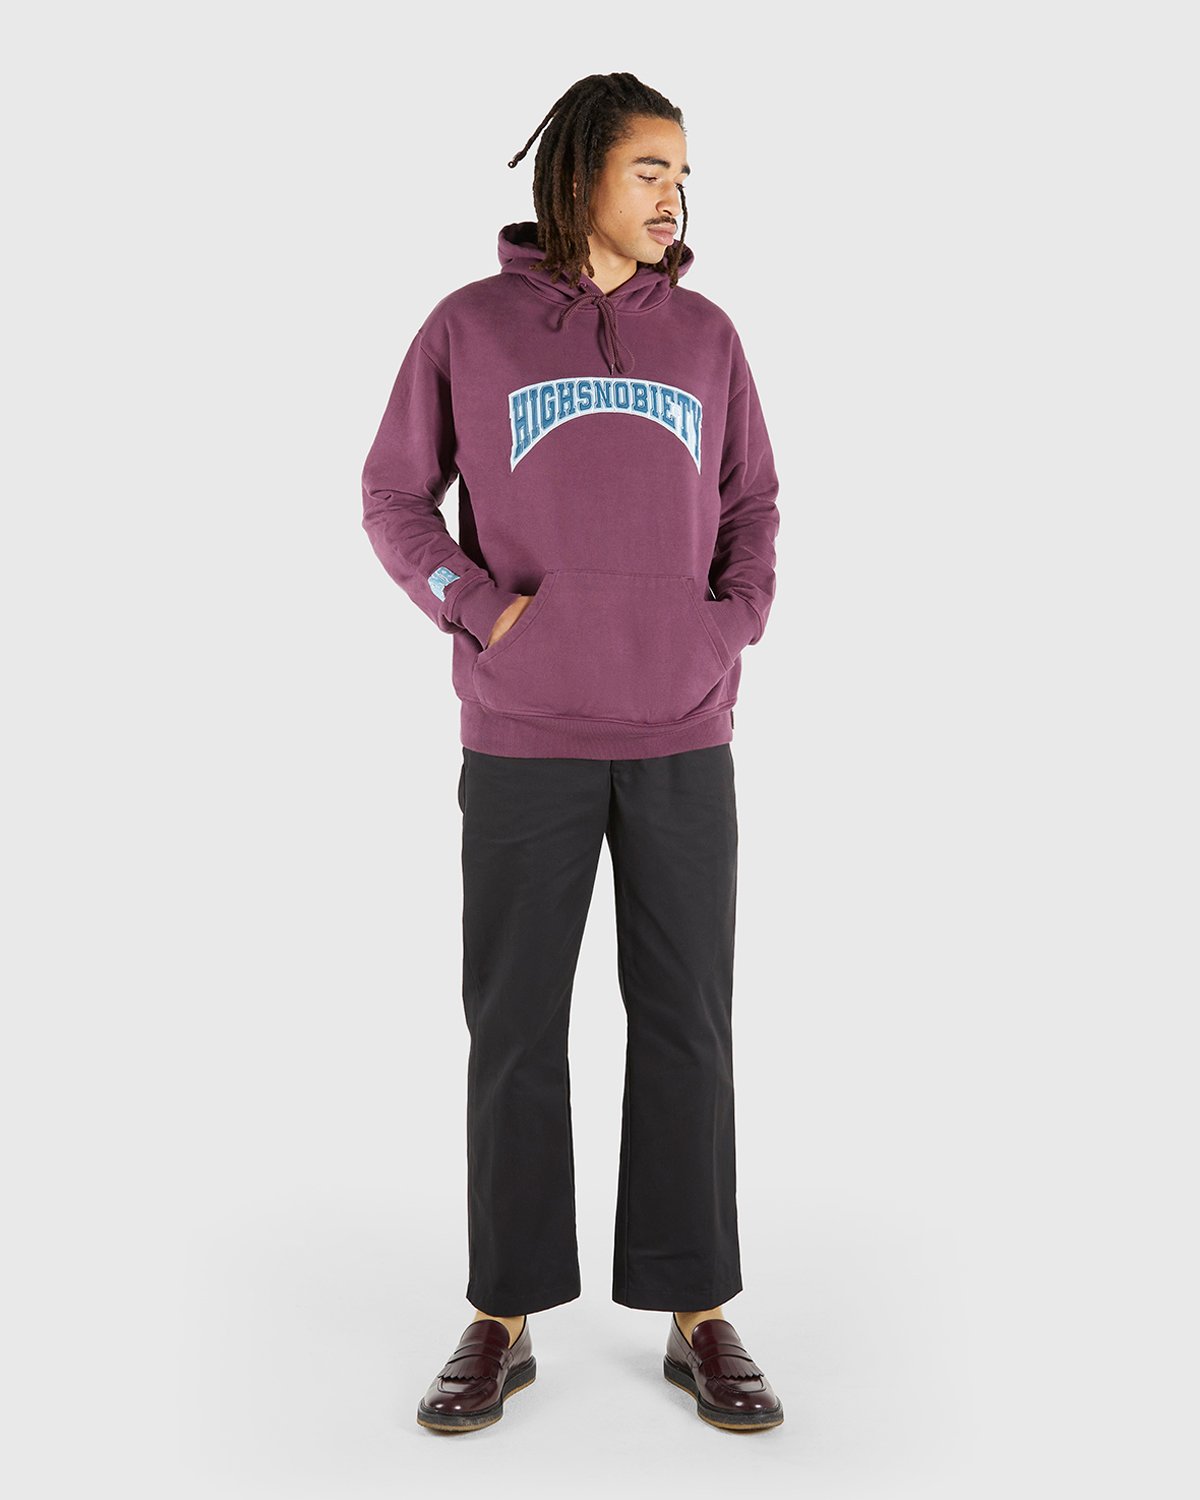 Highsnobiety - Collegiate Hoodie Purple - Clothing - Purple - Image 6